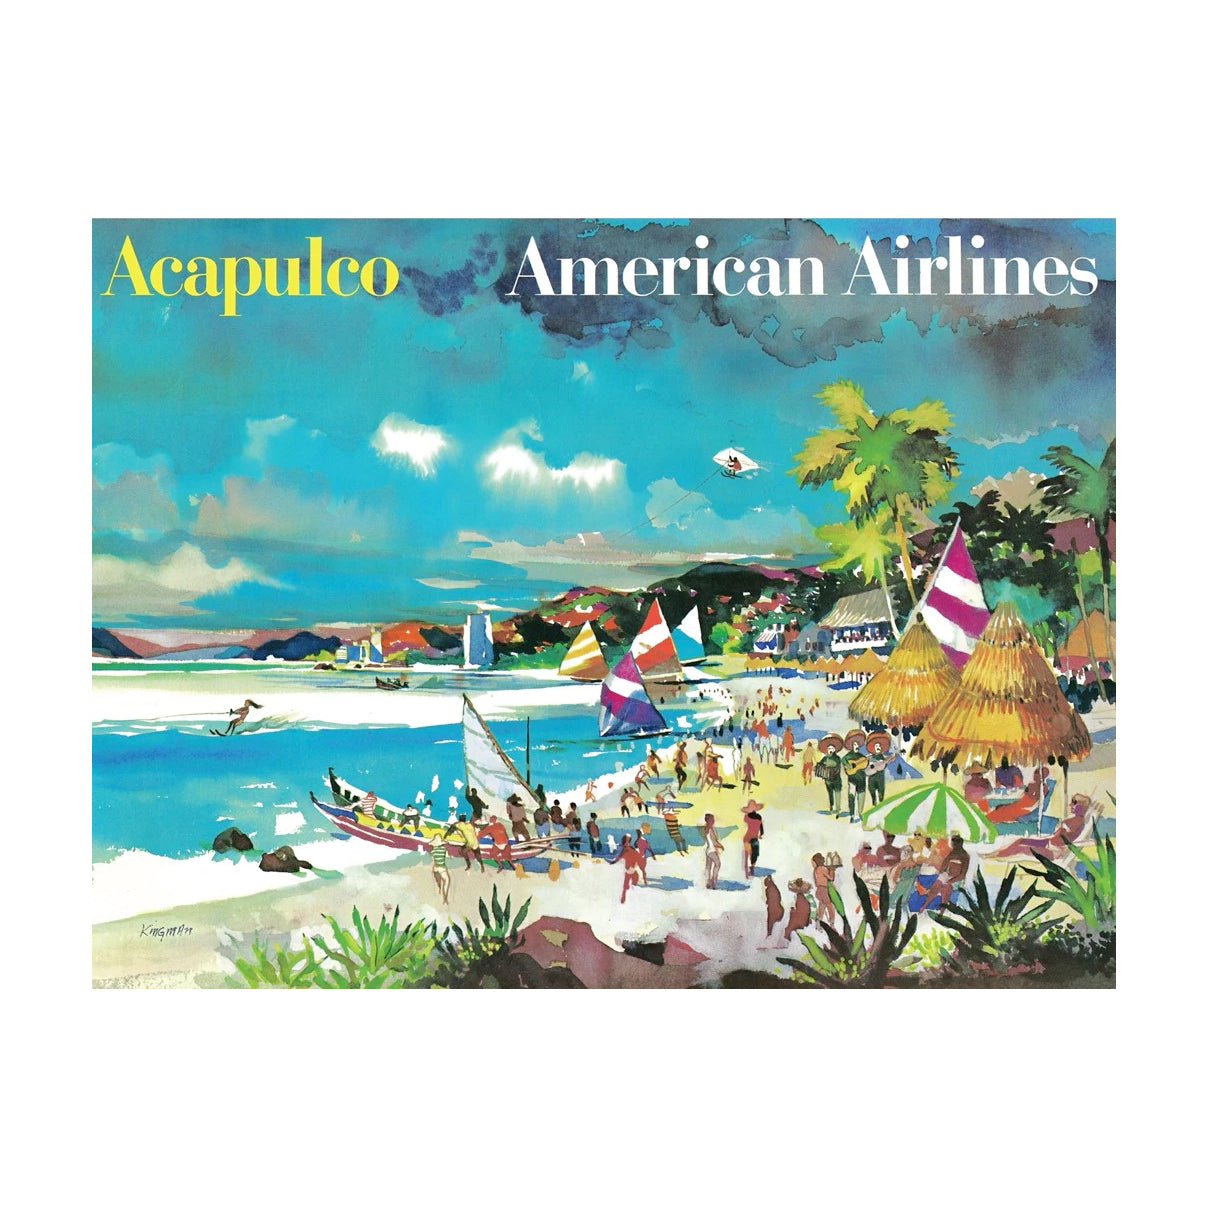 Puzzel American Airlines Acapulco│New York Puzzle Company 1500 stukjes│art. NPZAA2274│afbeedling illustratie witte achtergrond